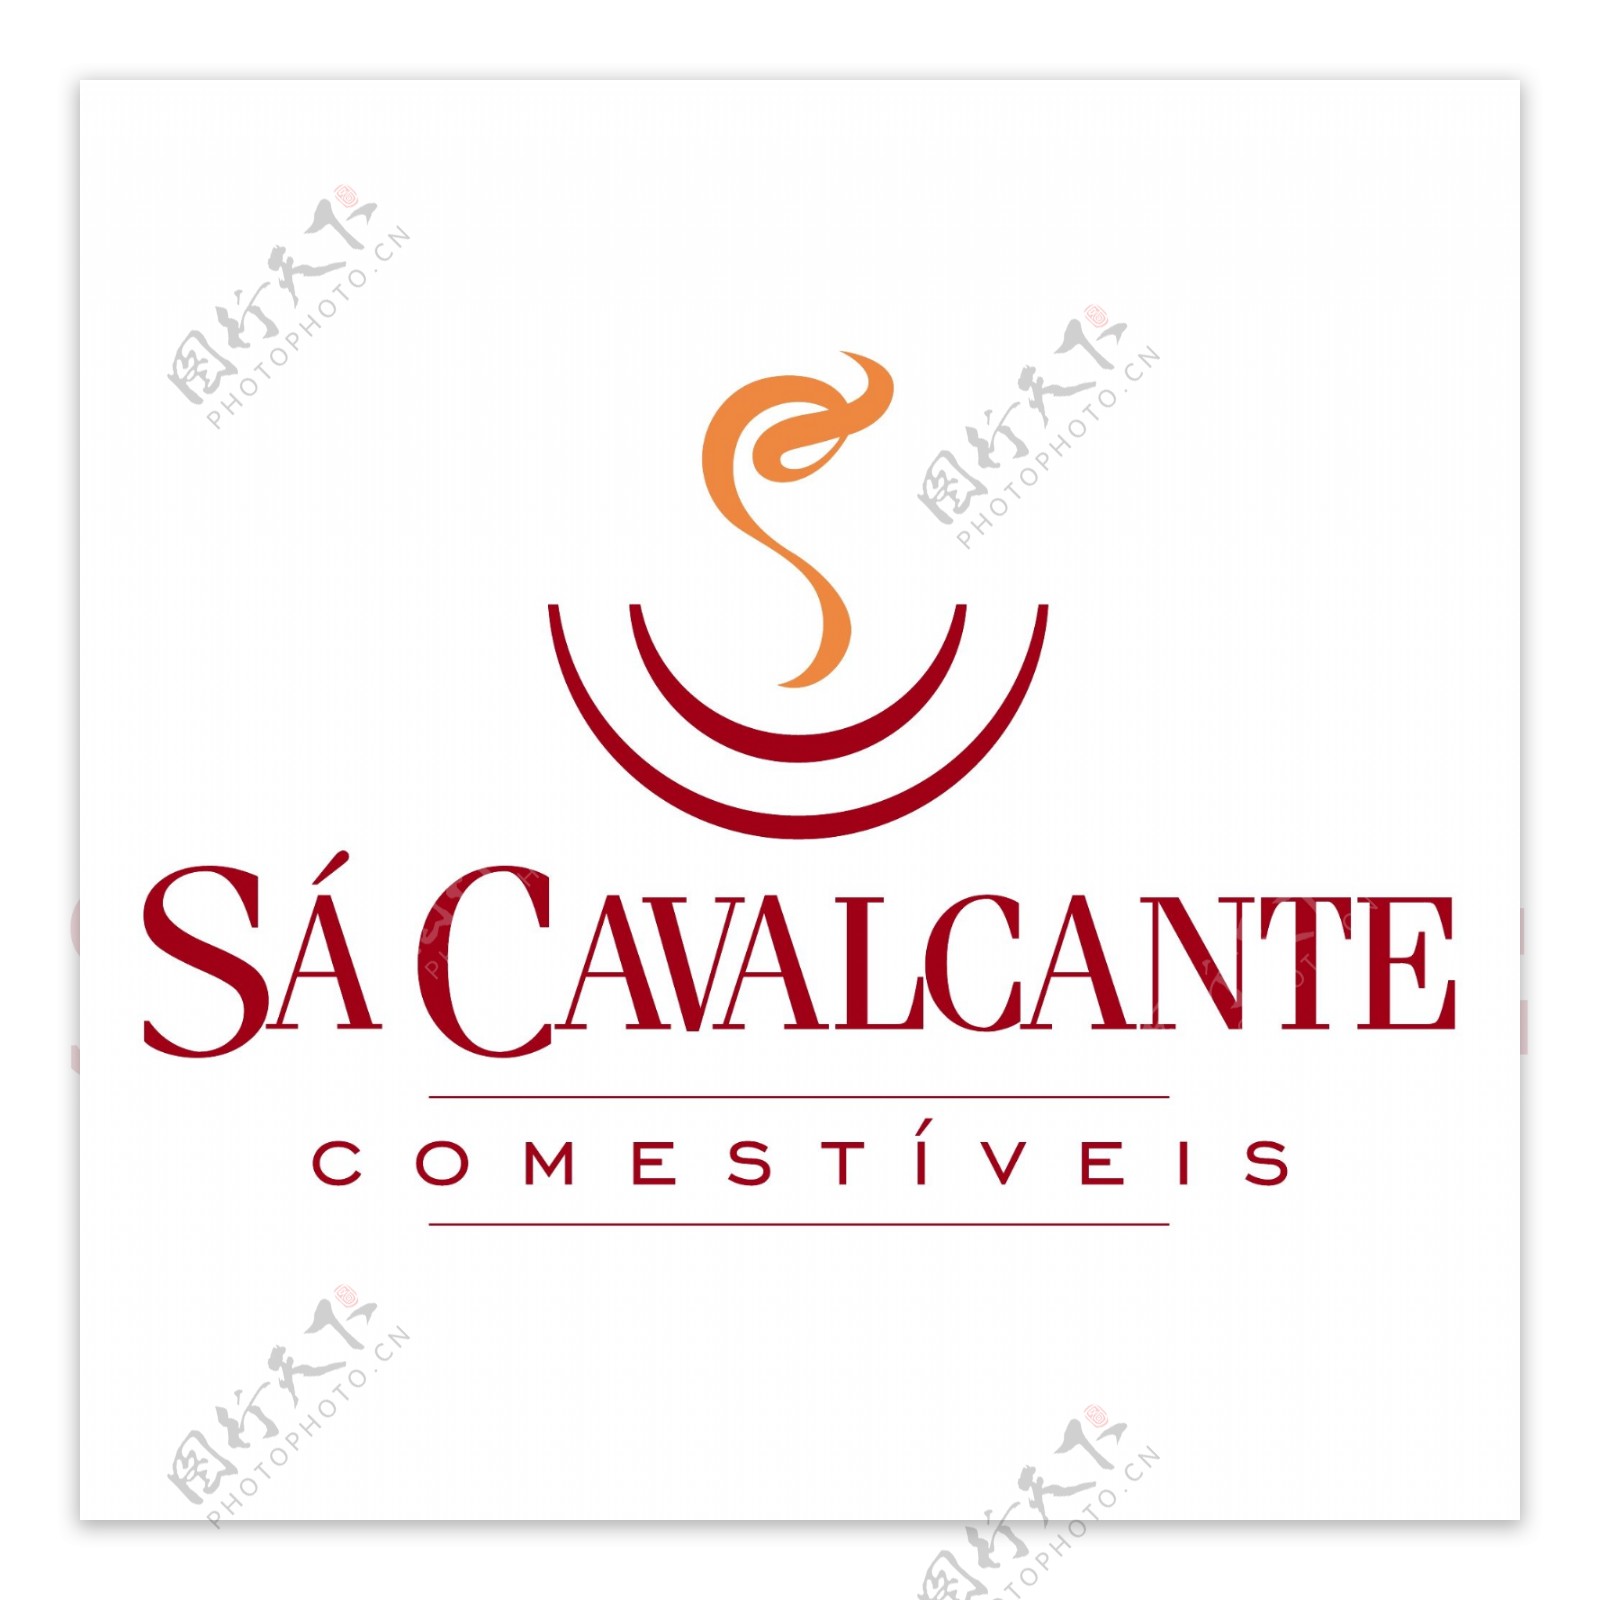 SA卡瓦尔坎蒂comestiveis